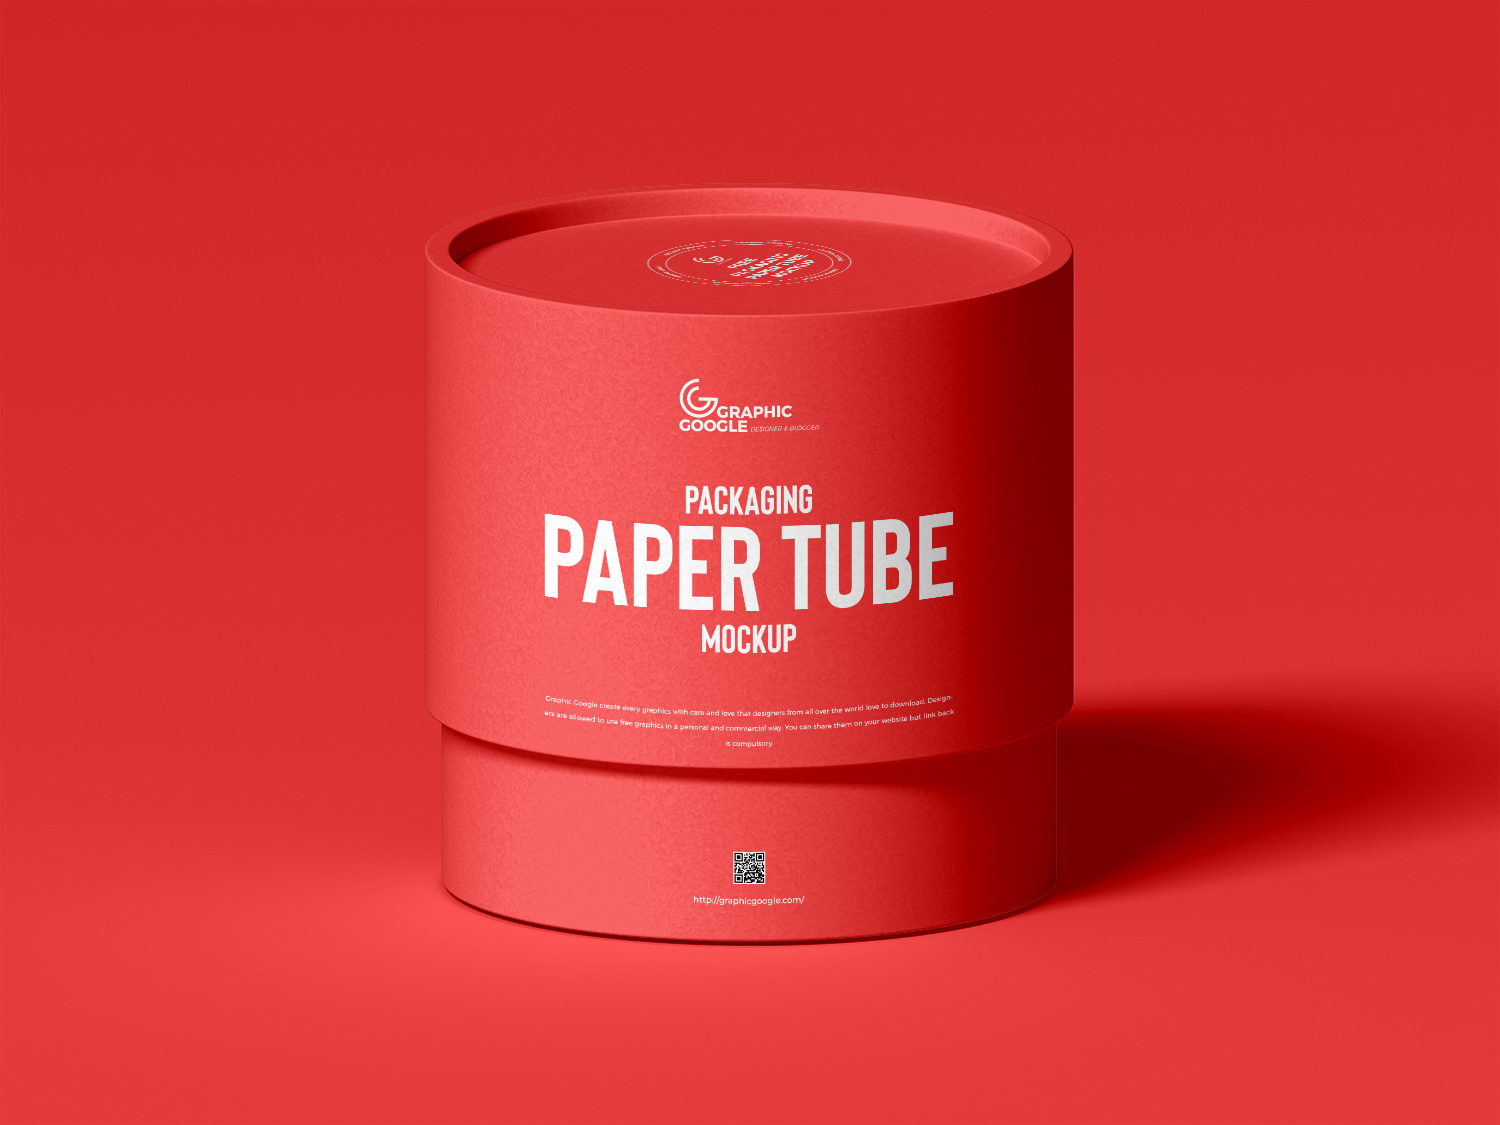 Packaging Paper Tube Mockup